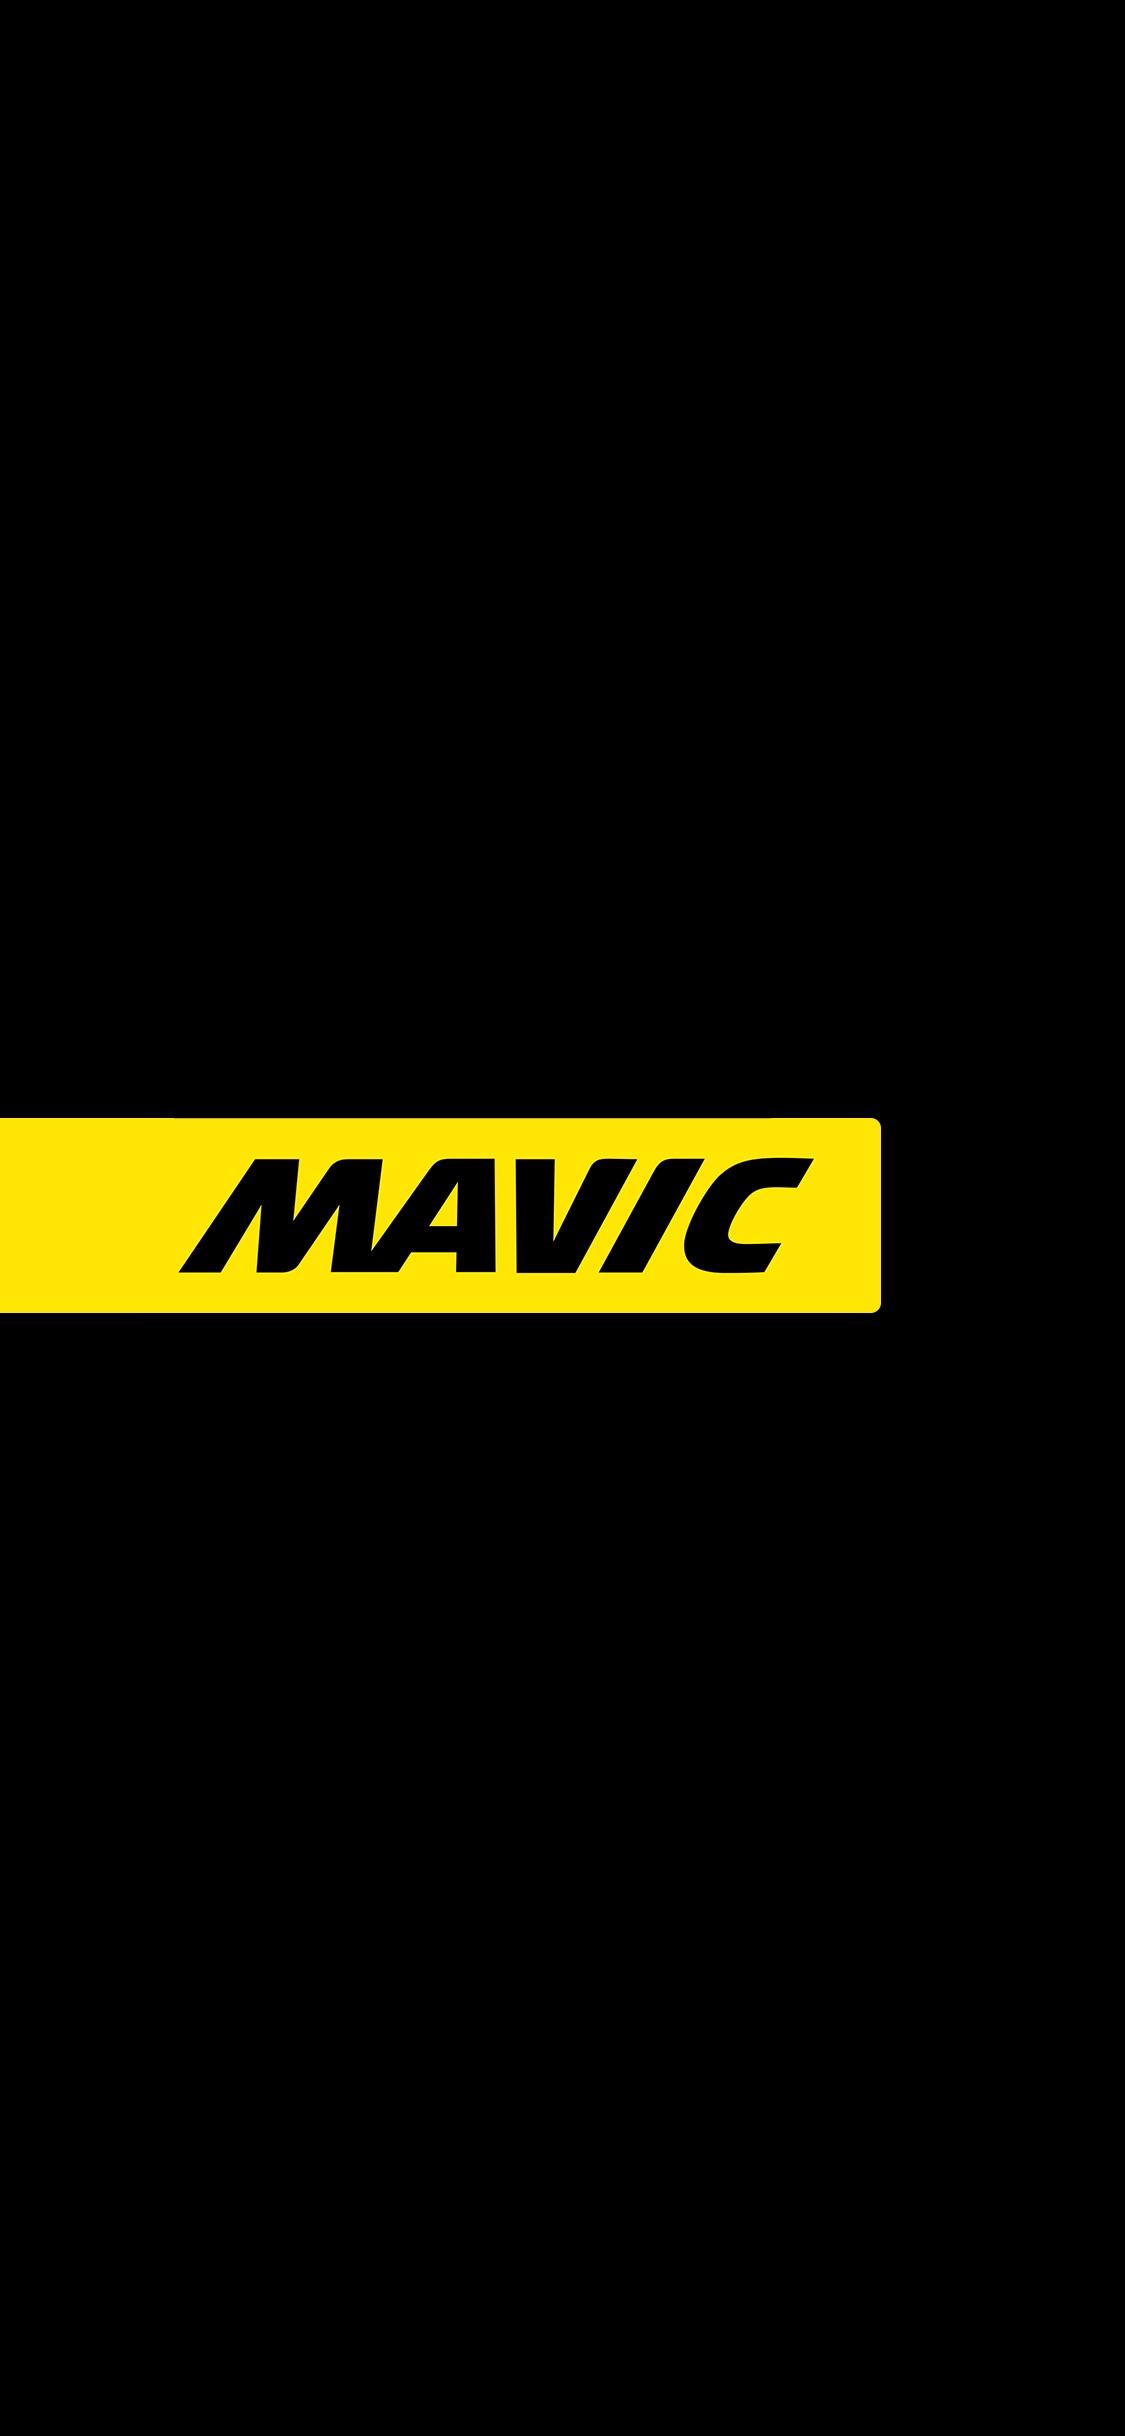 Mavic Logo - iPhone X Resolution-Mavic Cycling Logo [2436x1125 ...